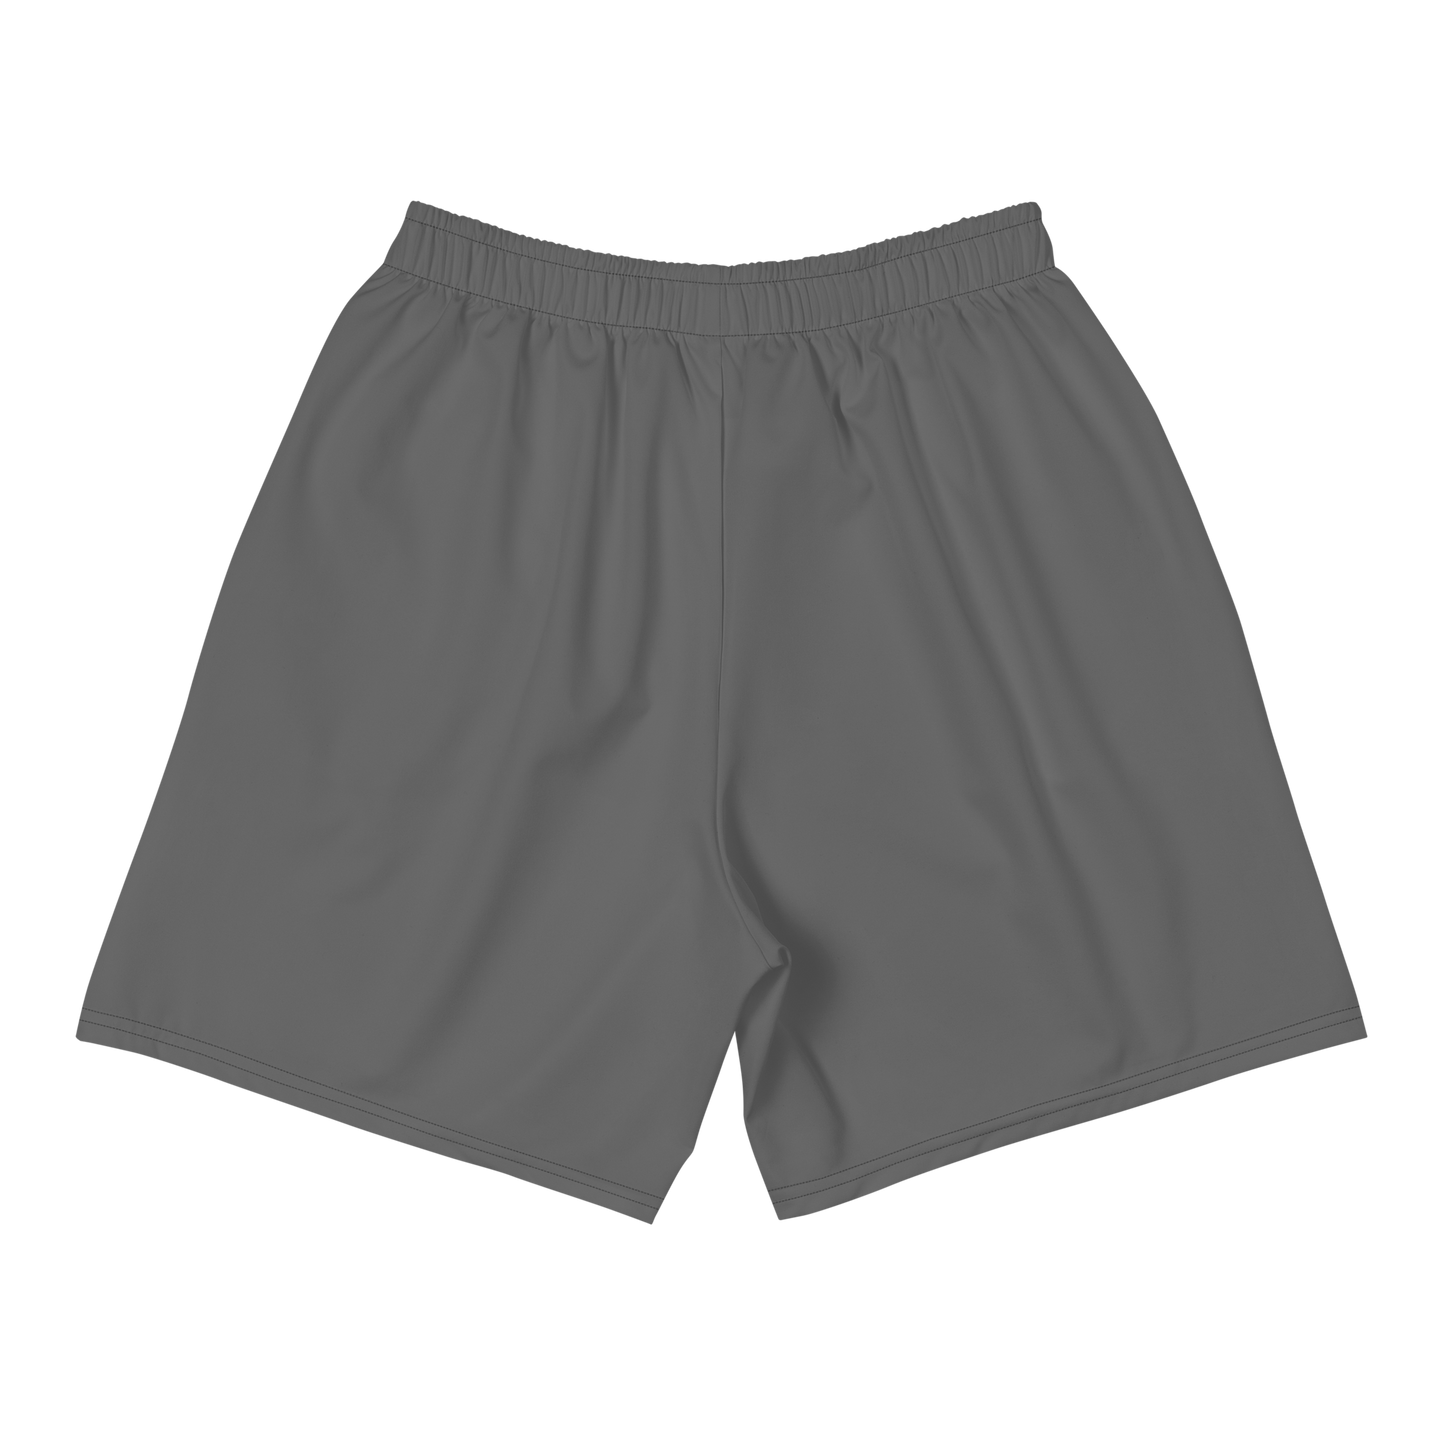 6.5 Shorts